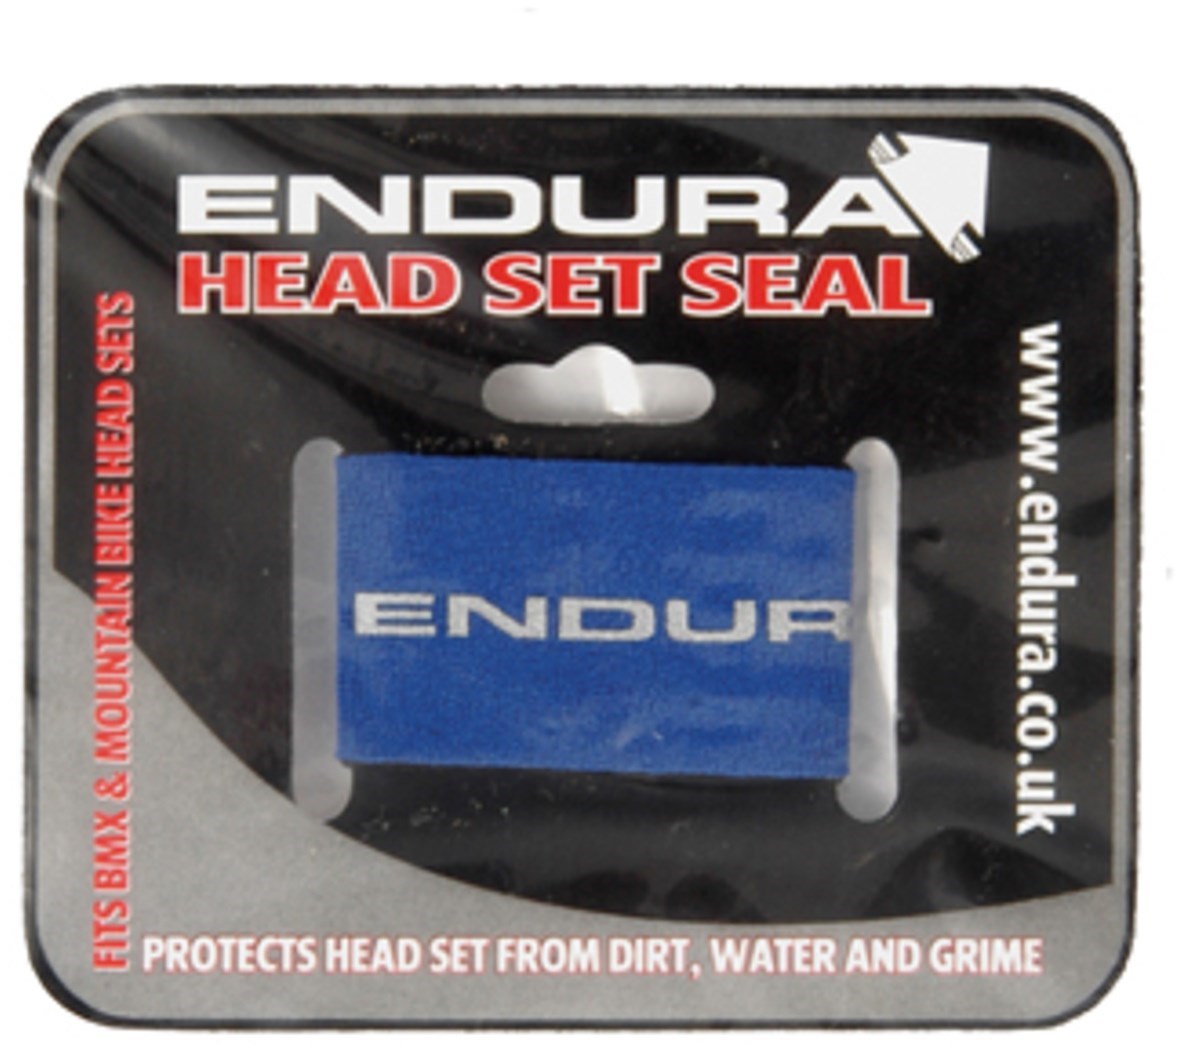 Endura Headset Seal Neoprene Cover 2011 product image